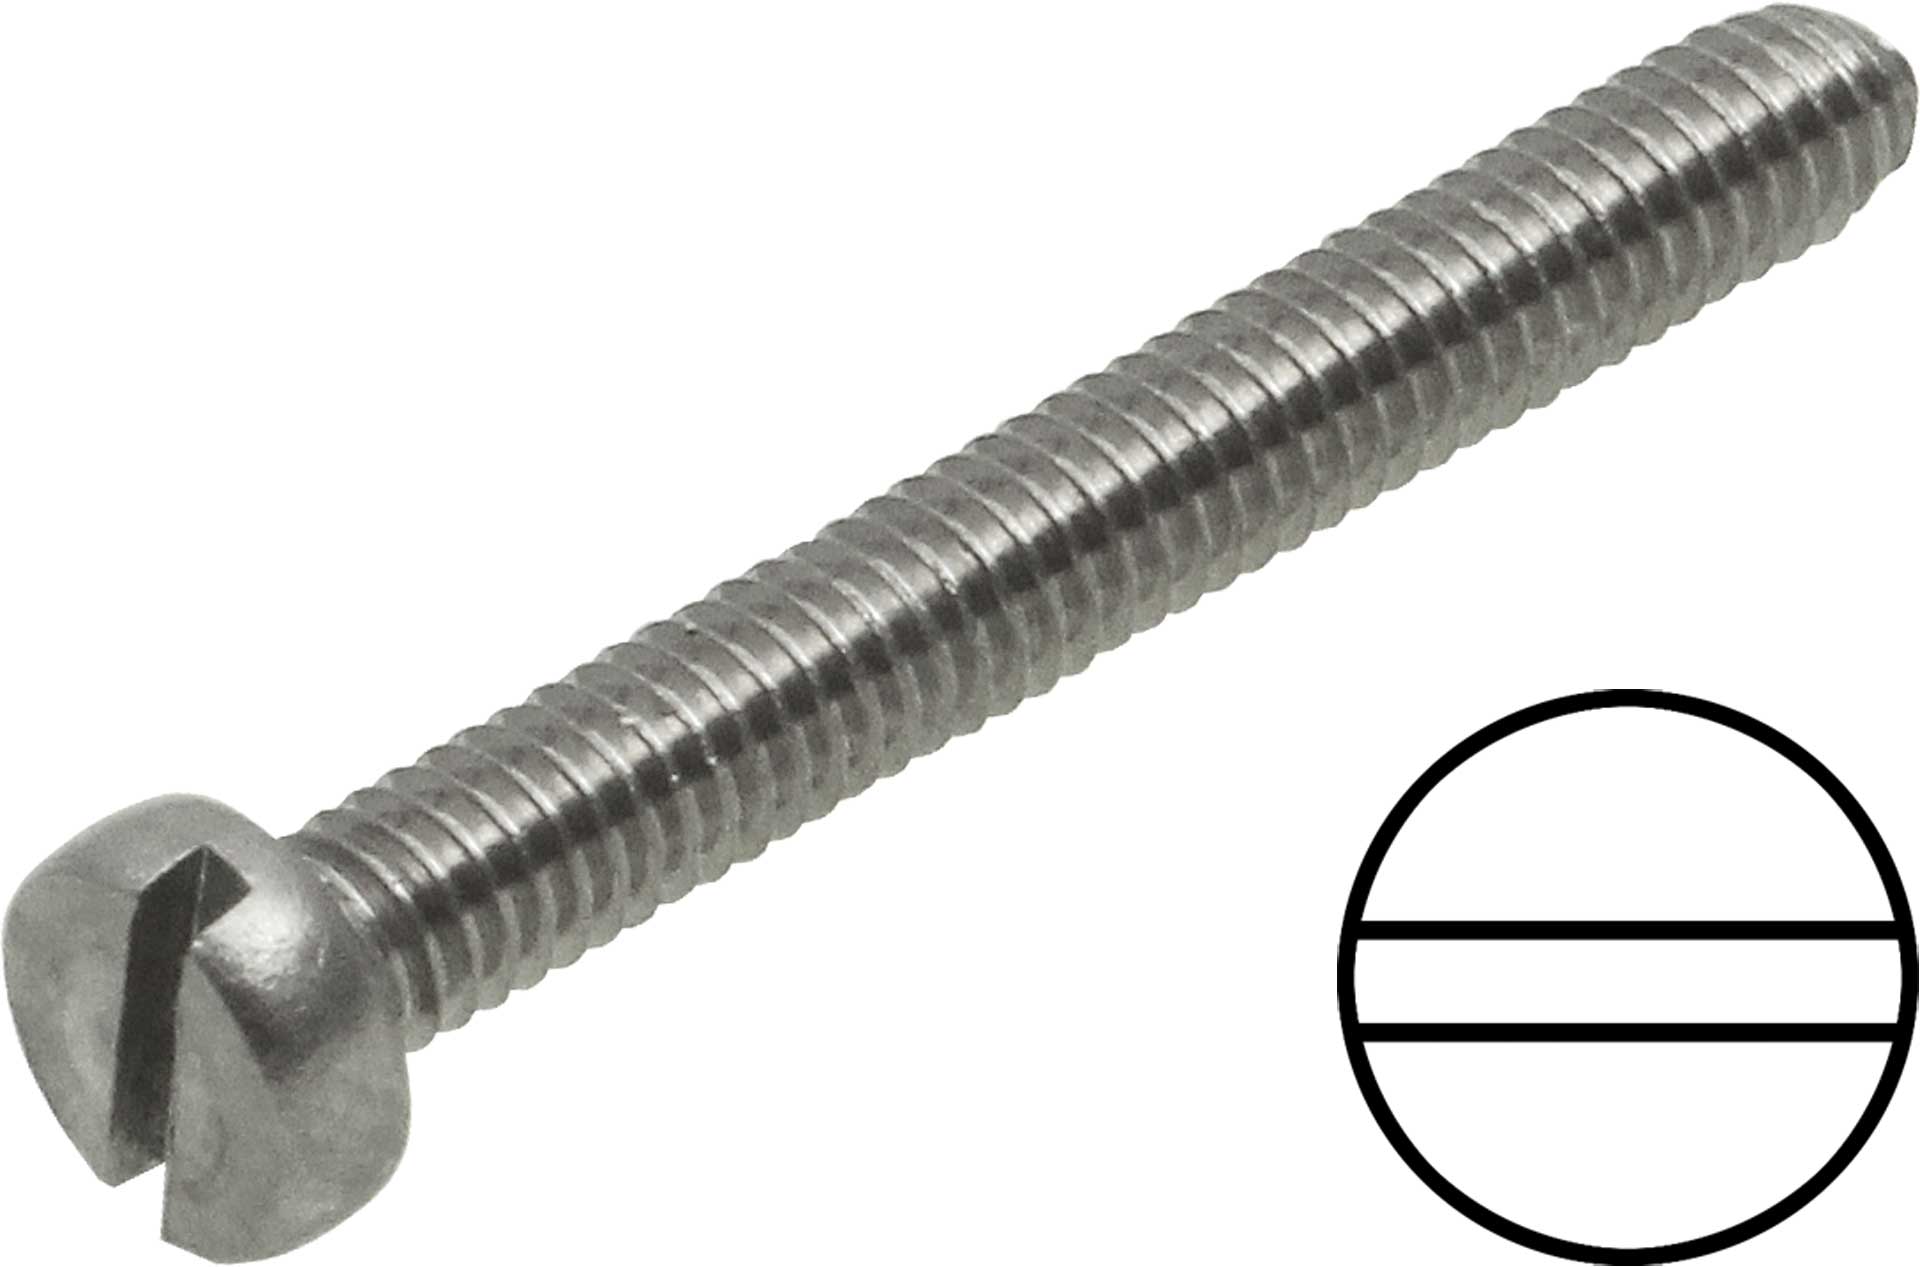 Modellbau Lindinger Cylinder head screws M2.5/10mm slotted Stainless steel, rustproof 20pcs.